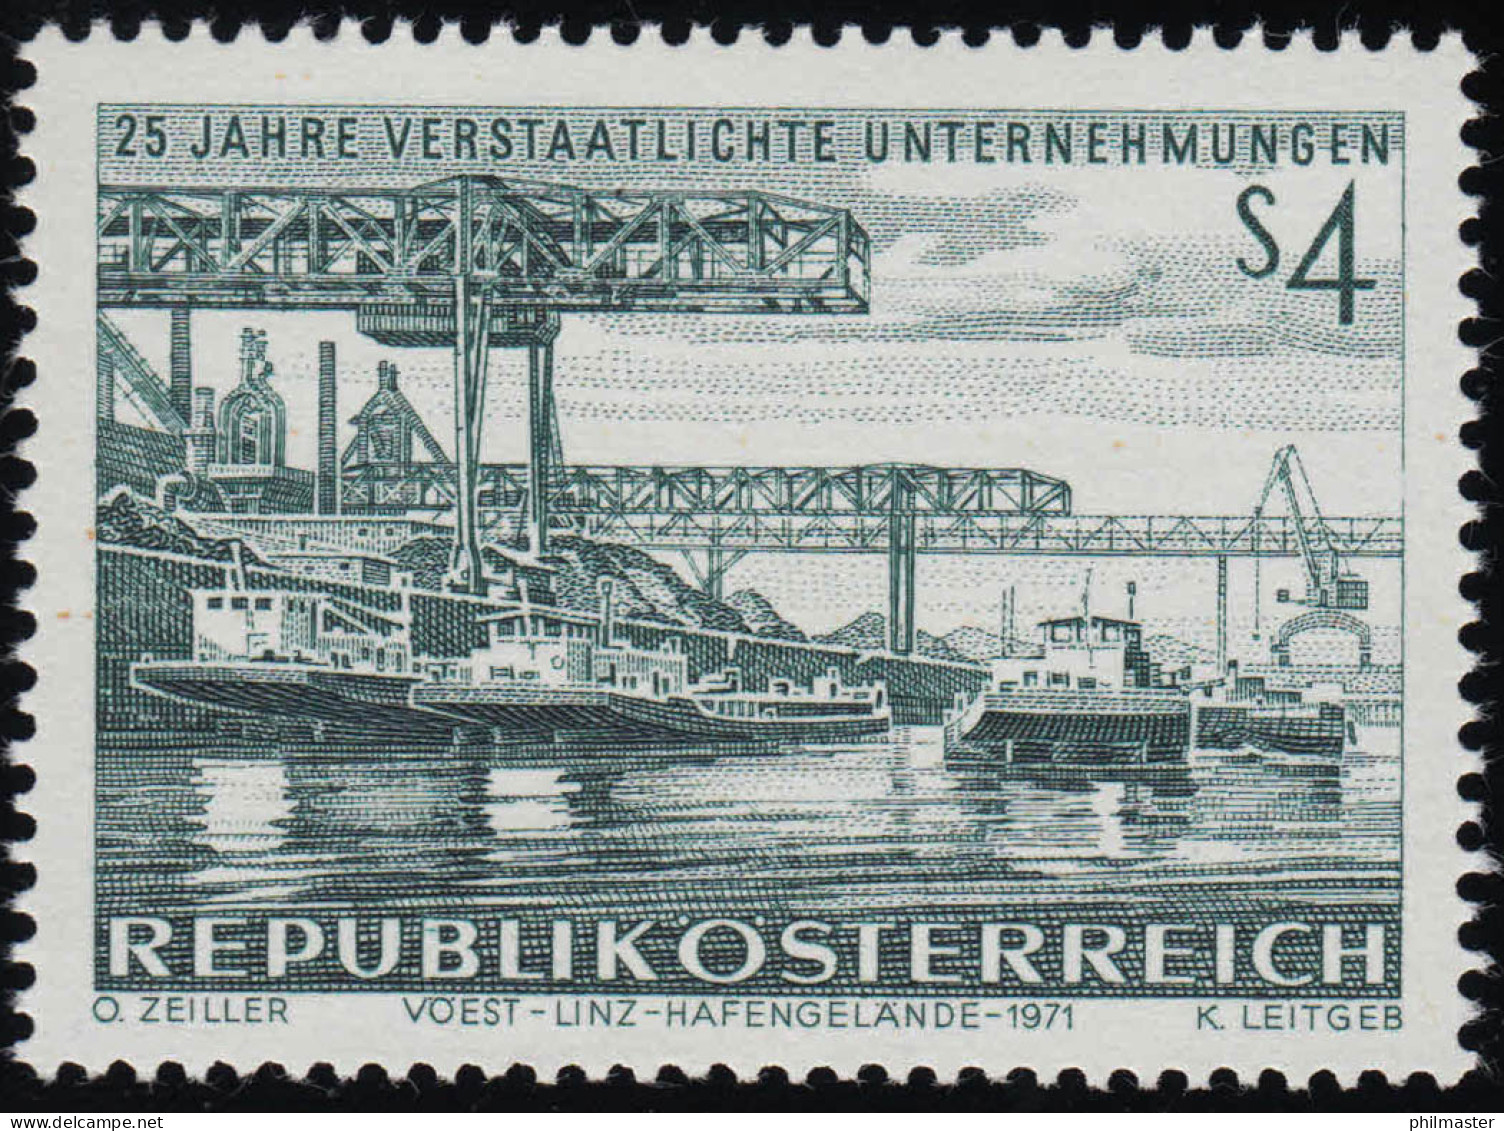 1375 25 J. Verstaatl. Unternehmen, Eisen & Stahlwerk Linz Hafengelände, 4 S, ** - Ongebruikt